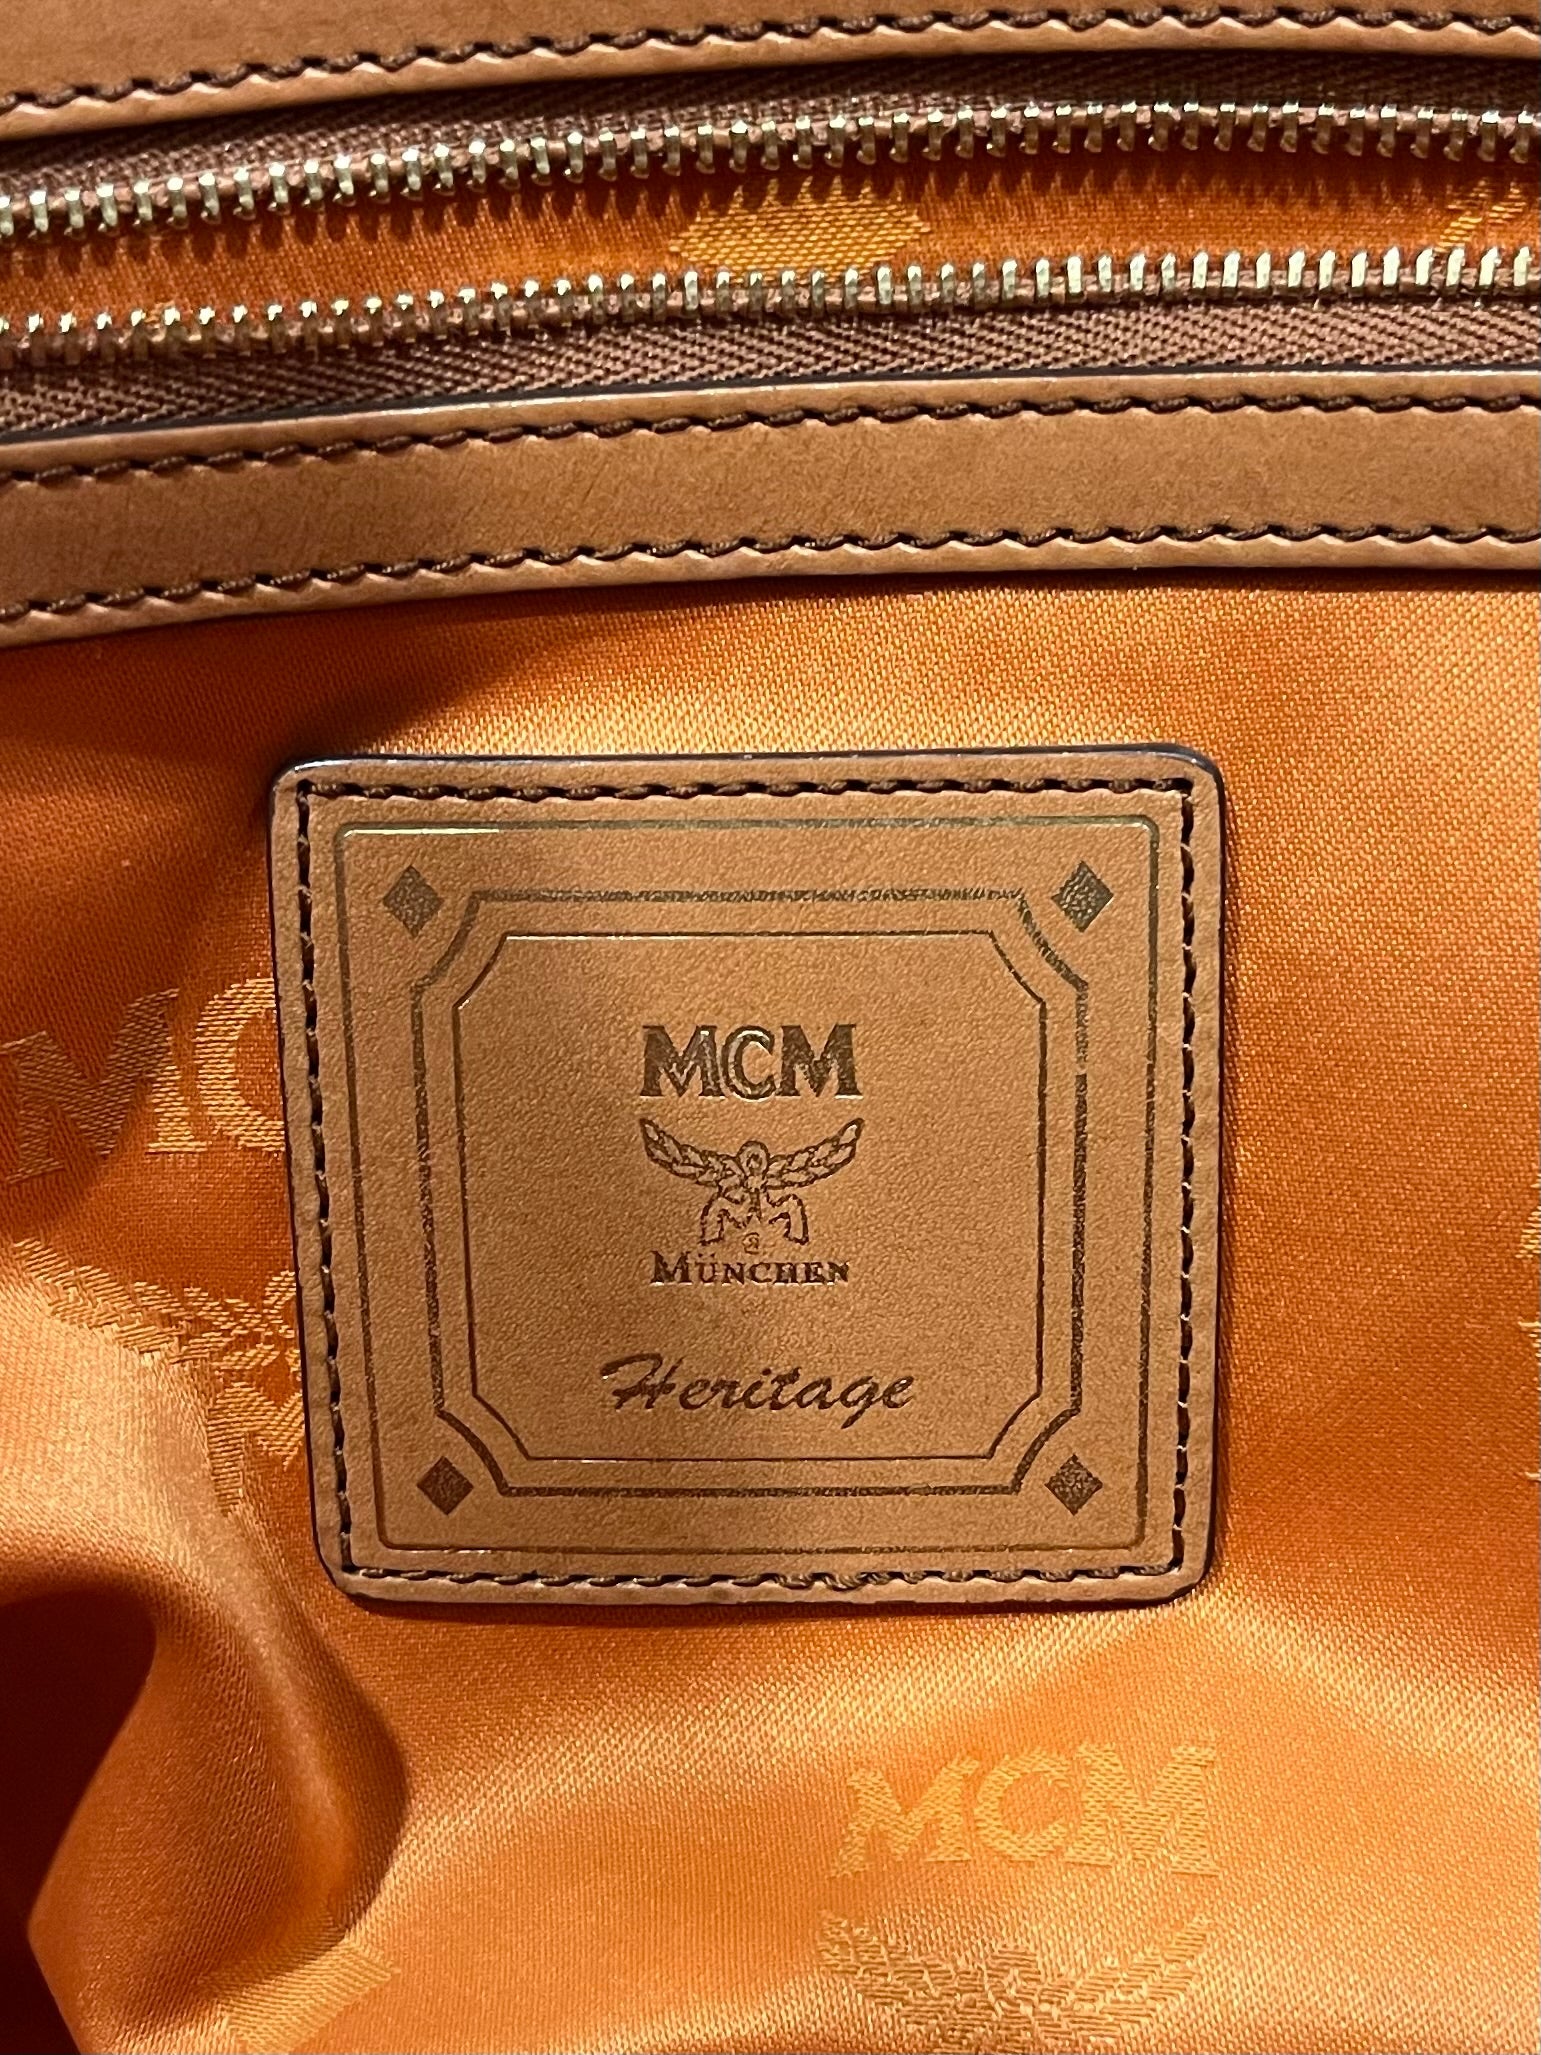 NEW Authentic MCM Zip Around Wallet in Visetos Original Cognac w/ Red